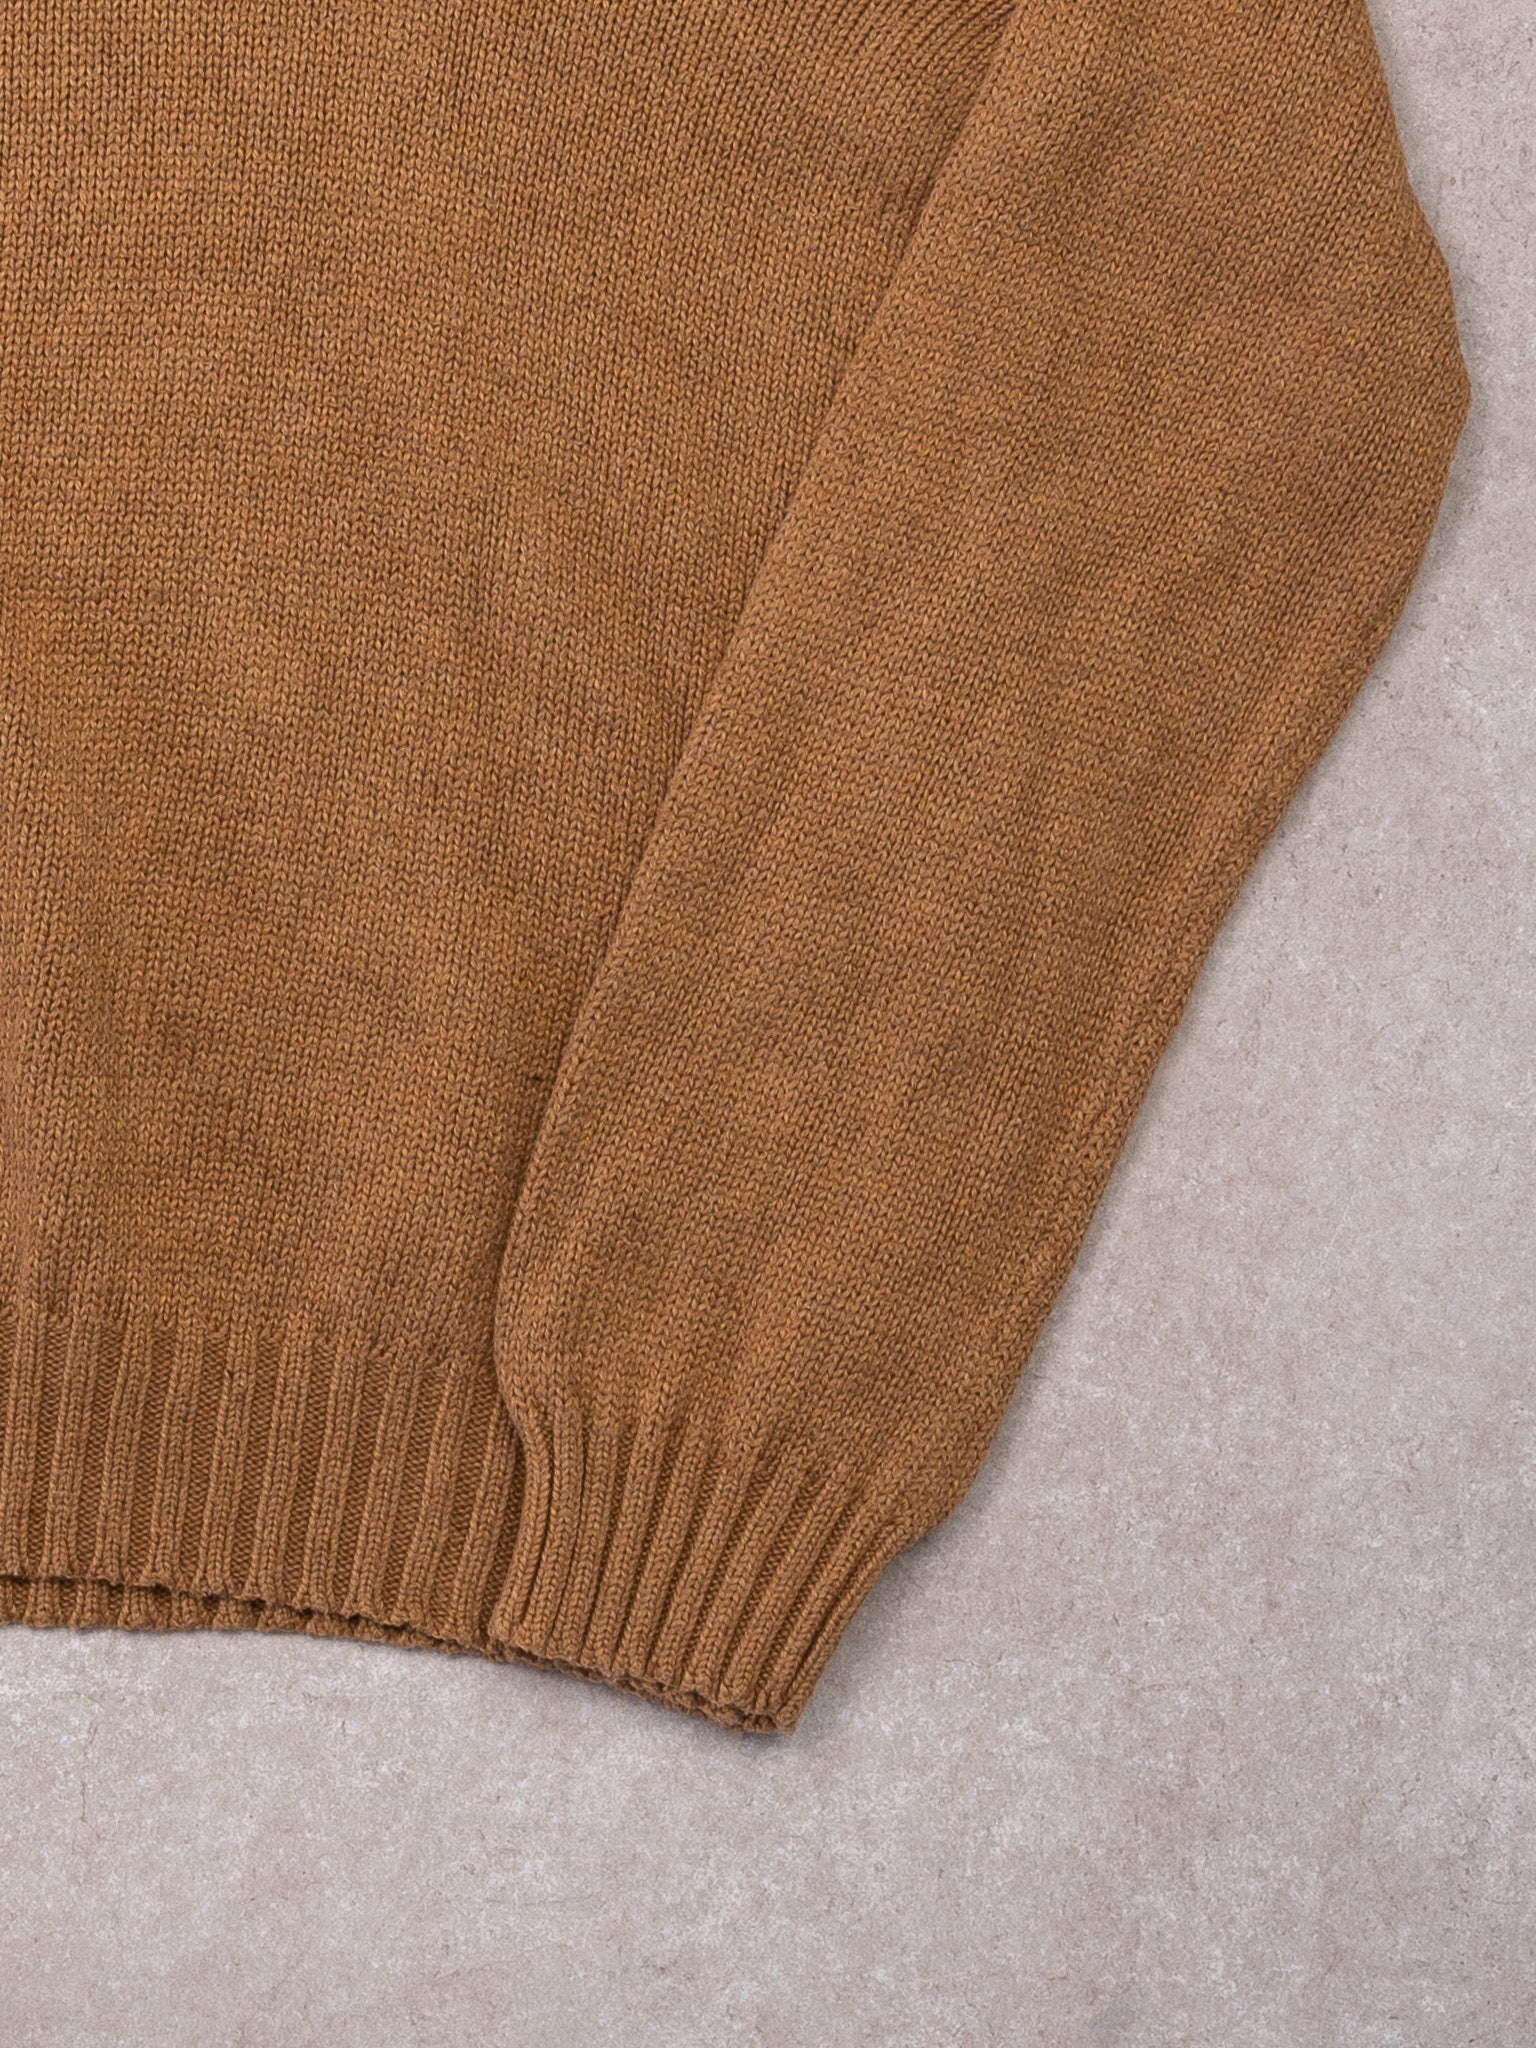 Vintage Camel Polo RL Knit Sweater (M)